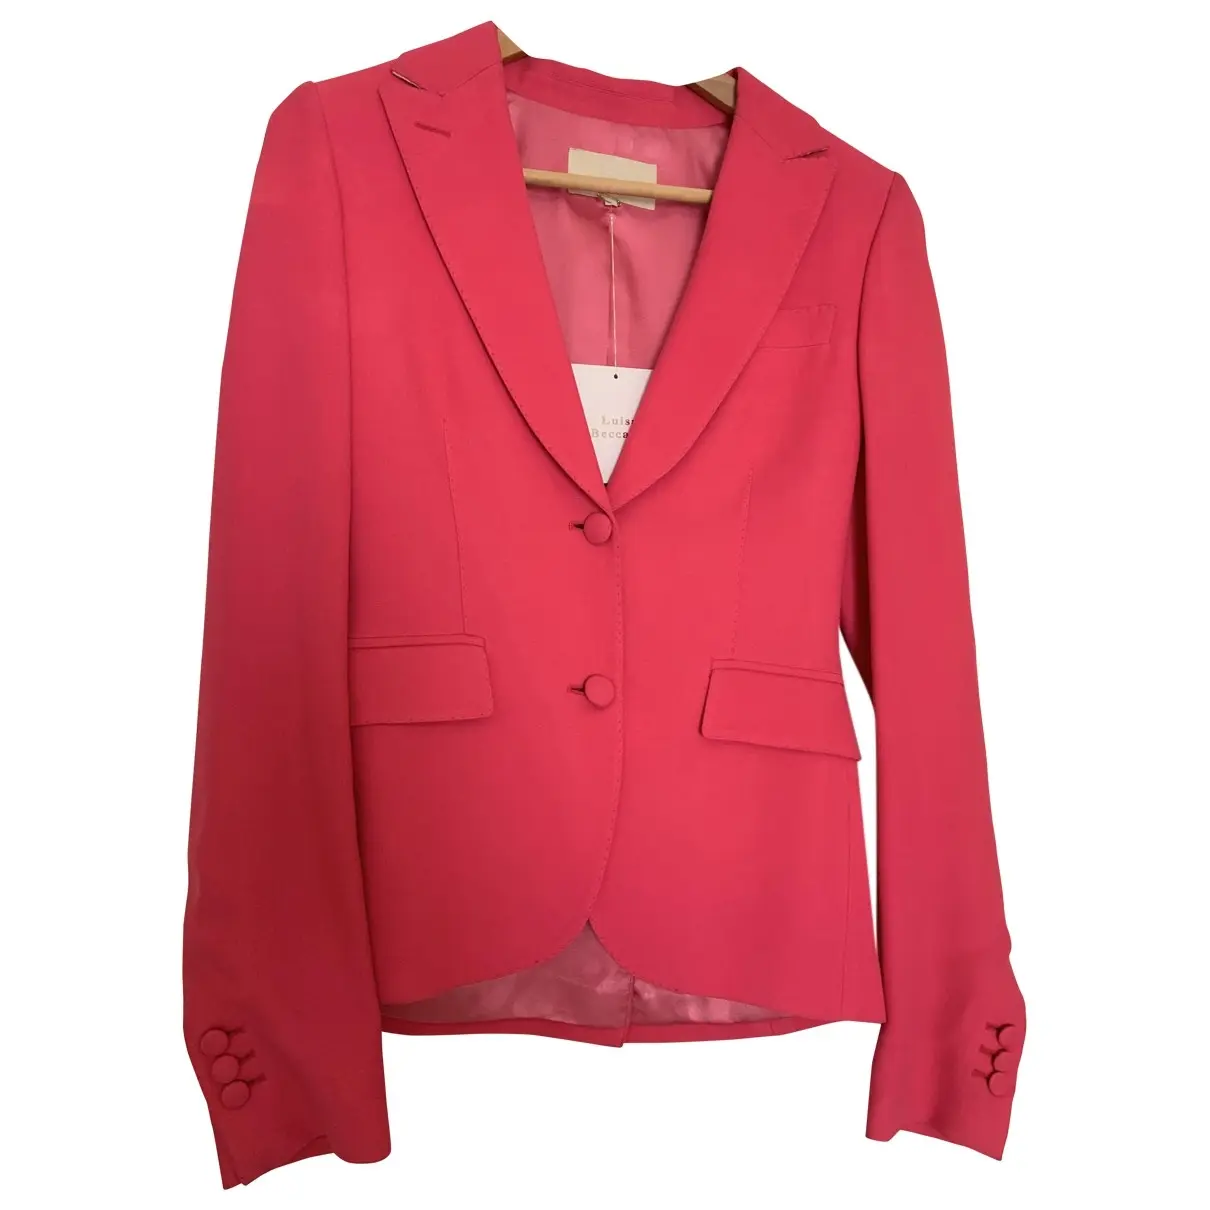 Suit jacket Luisa Beccaria